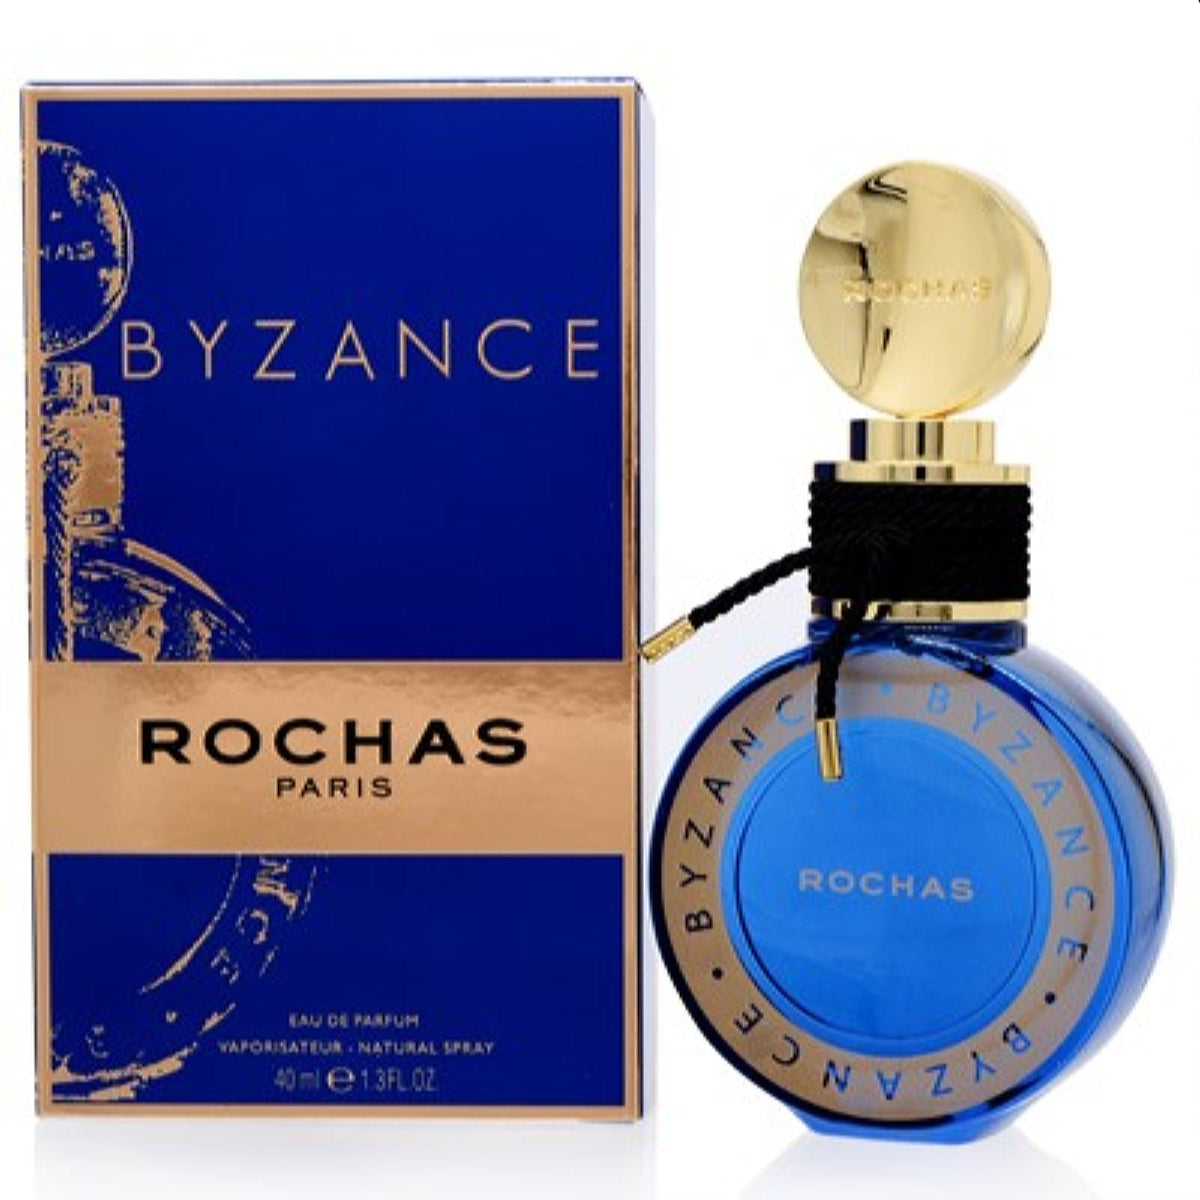 Byzance Rochas Edp Spray 1.3 Oz (40 Ml) For Women  RC020A03